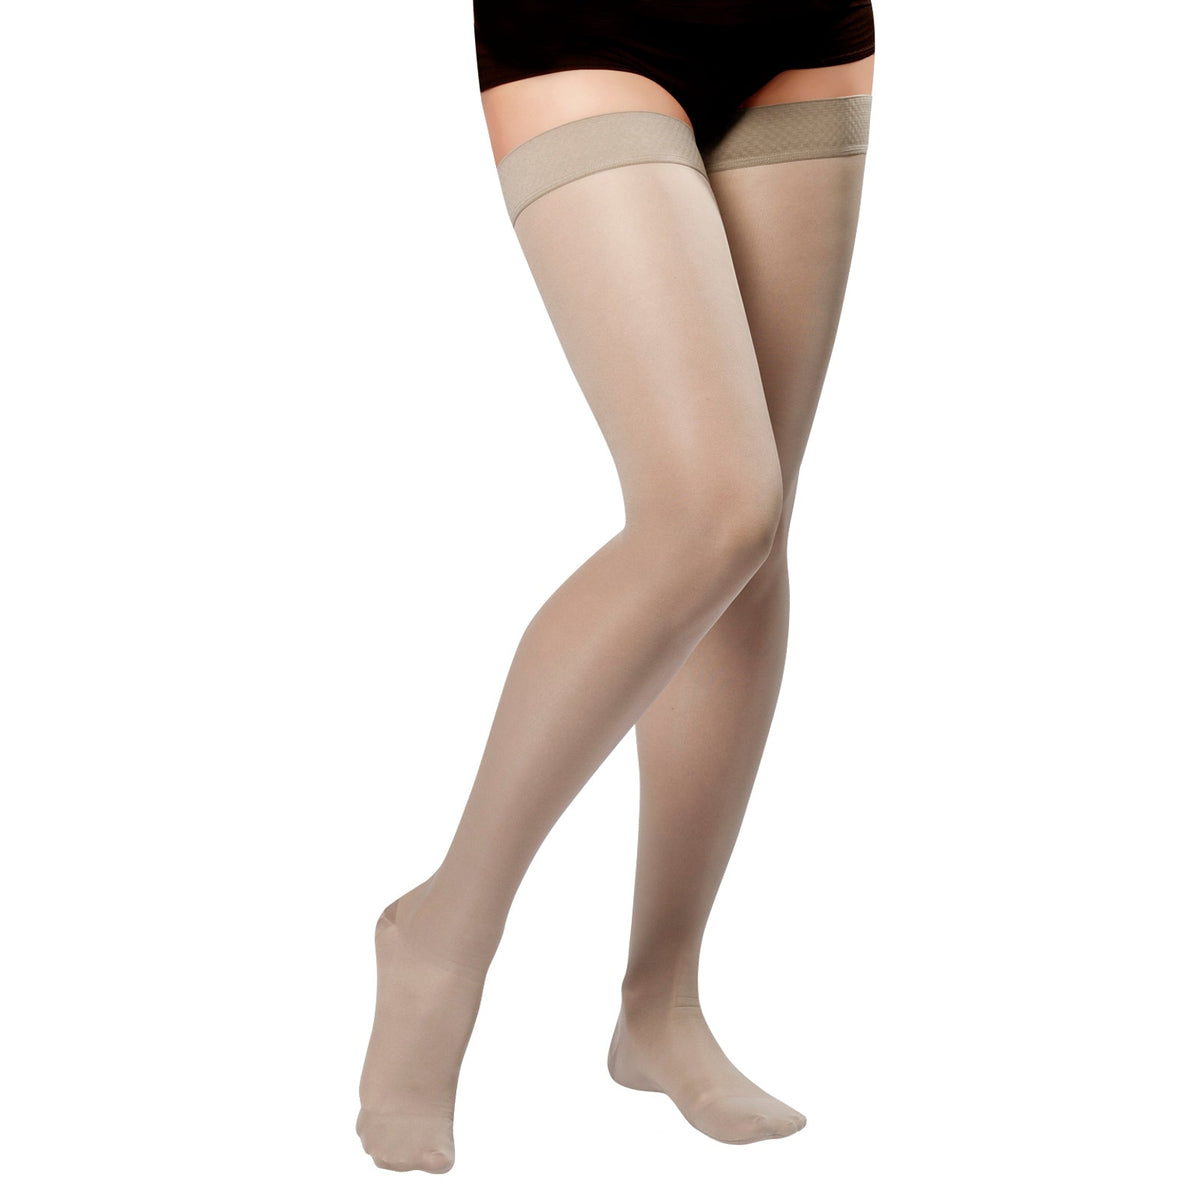 Medical Compression Stockings for Women Full Leg Ted Hose 30-40 MmHg Open  Toe Maternity HoseThigh High Compression Socks